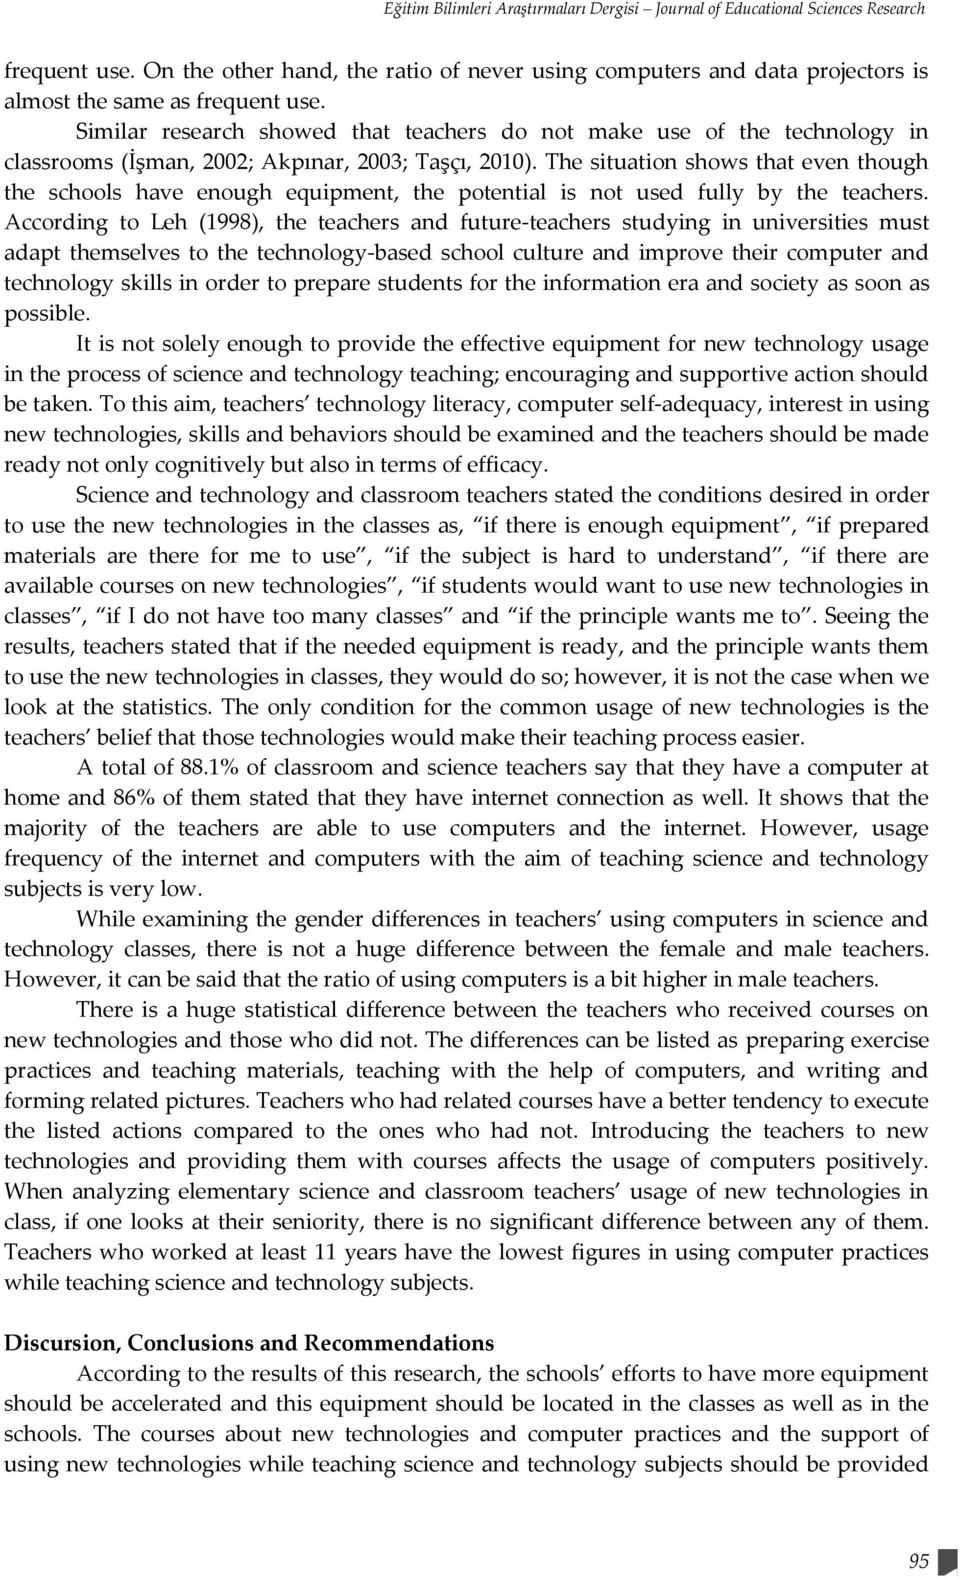 Similar research showed that teachers do not make use of the technology in classrooms (İşman, 2002; Akpınar, 2003; Taşçı, 2010).